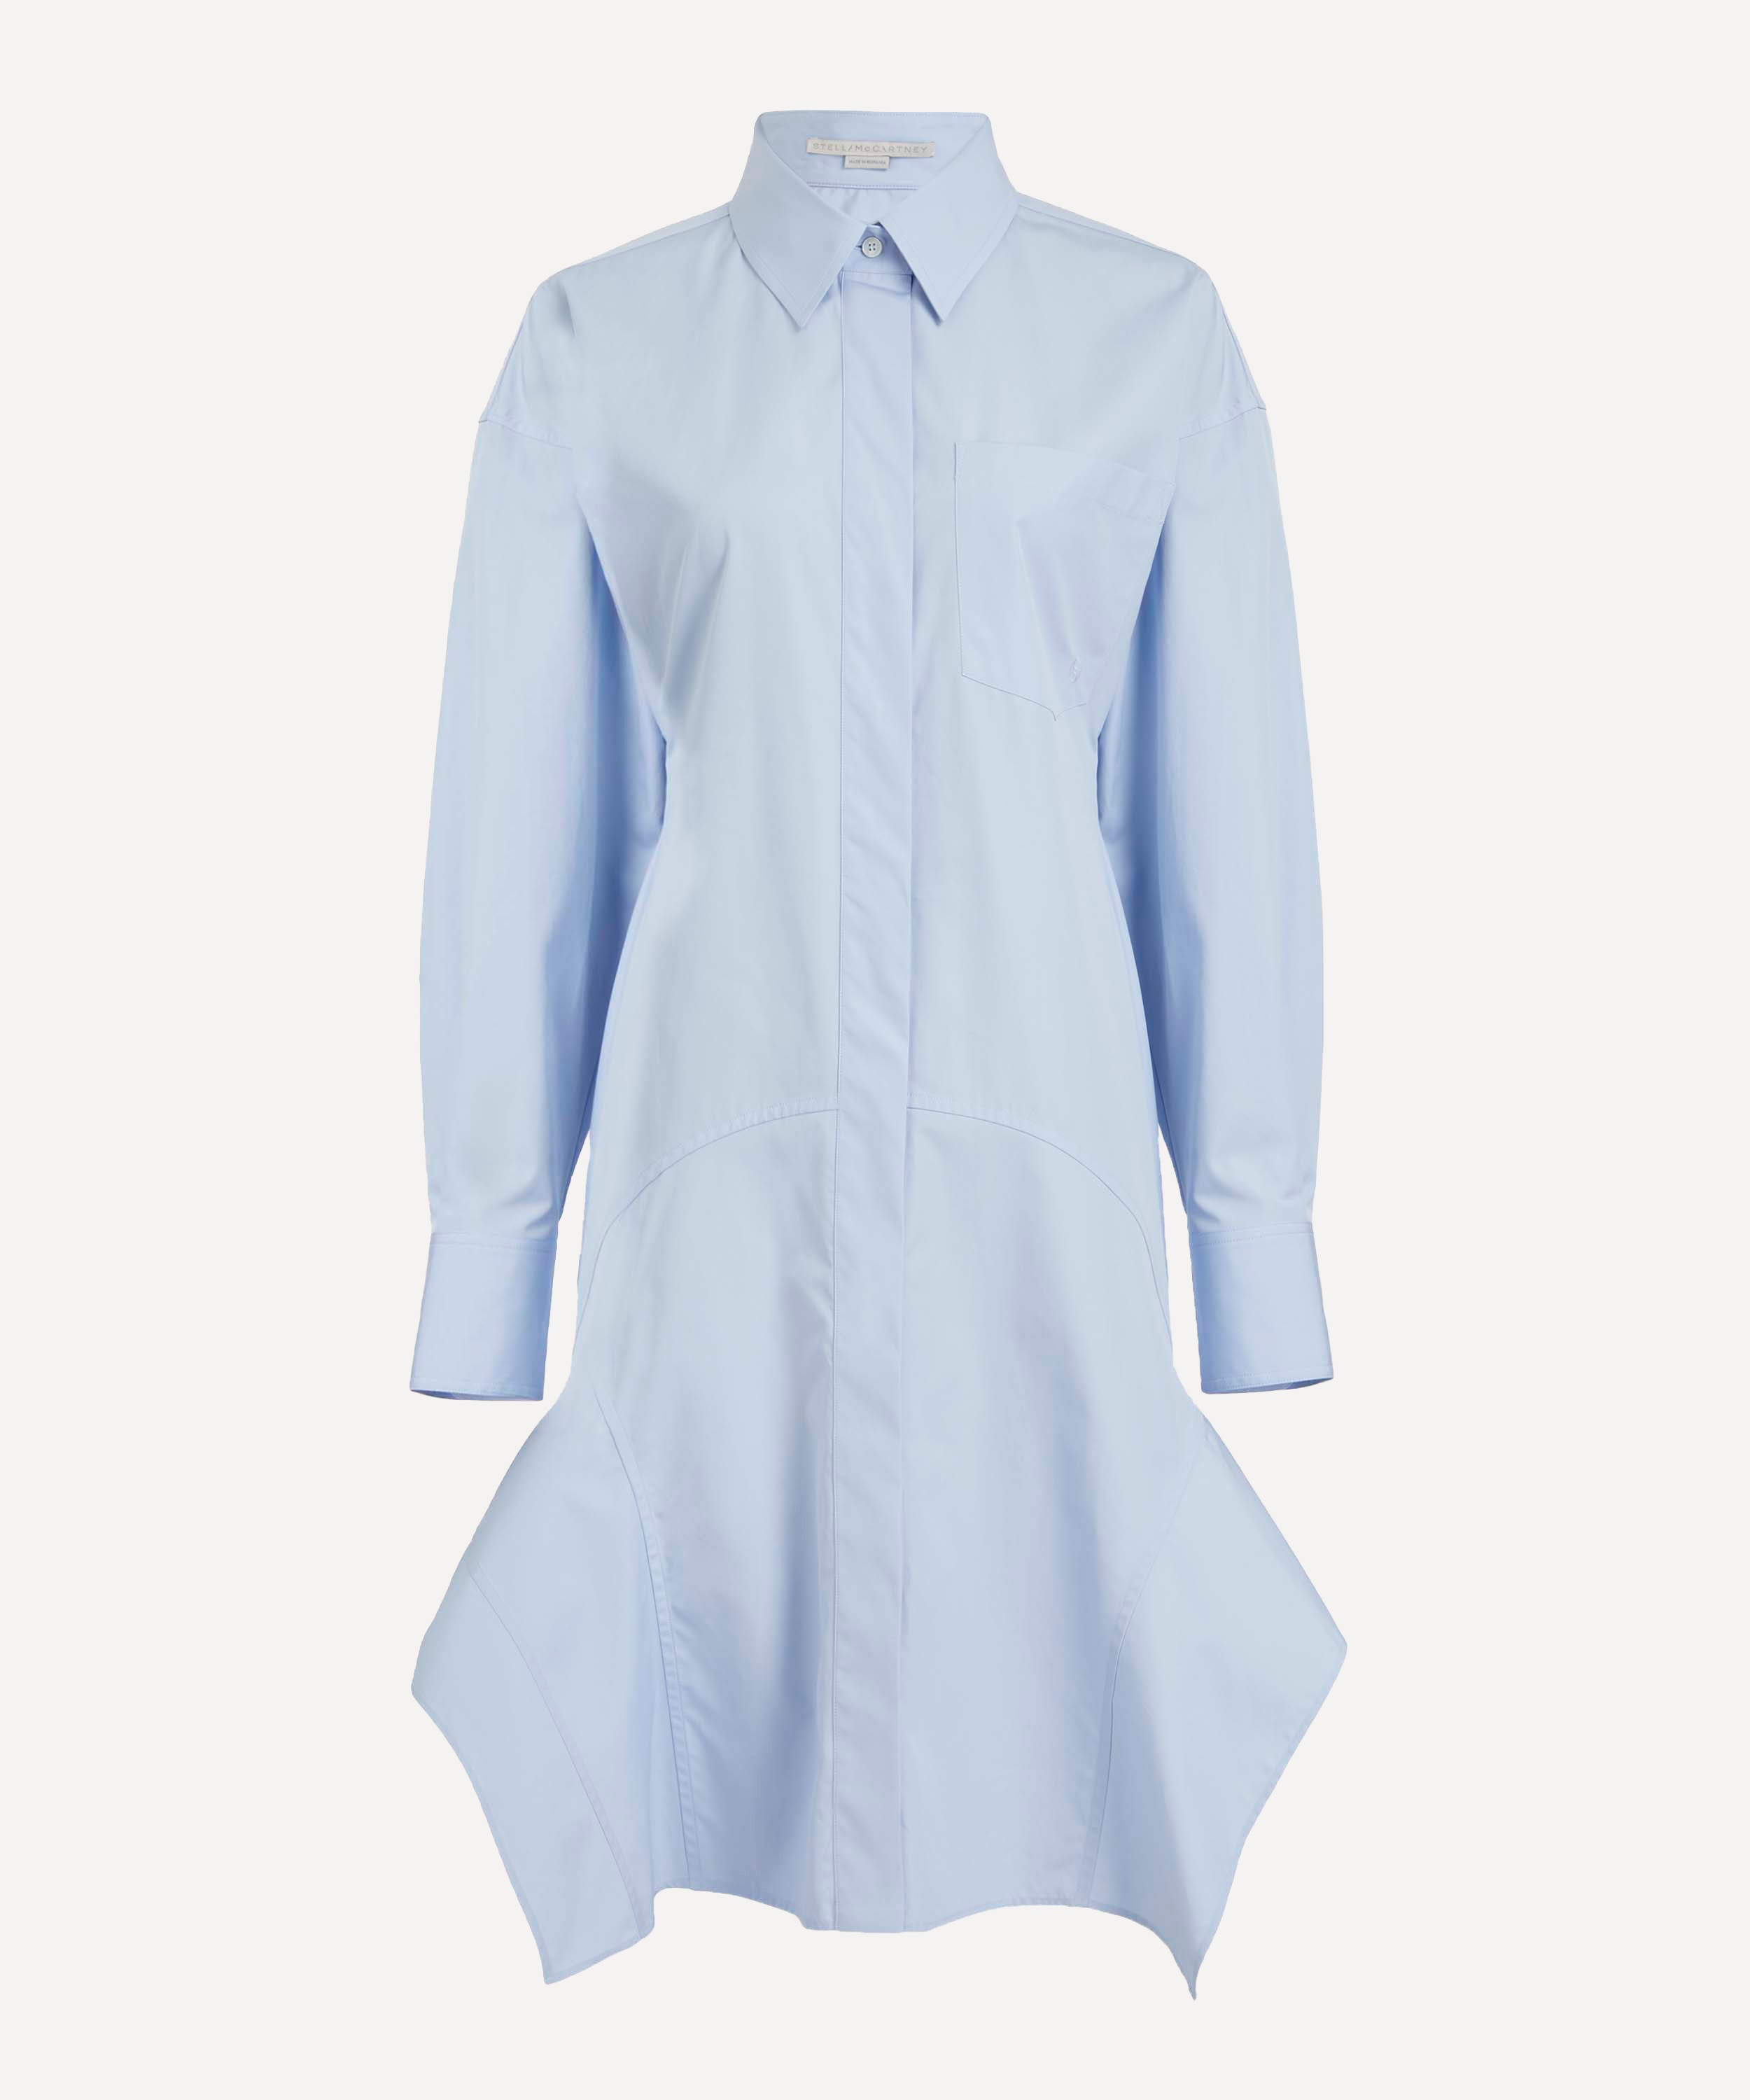 Stella McCartney - Asymmetric Shirt Dress